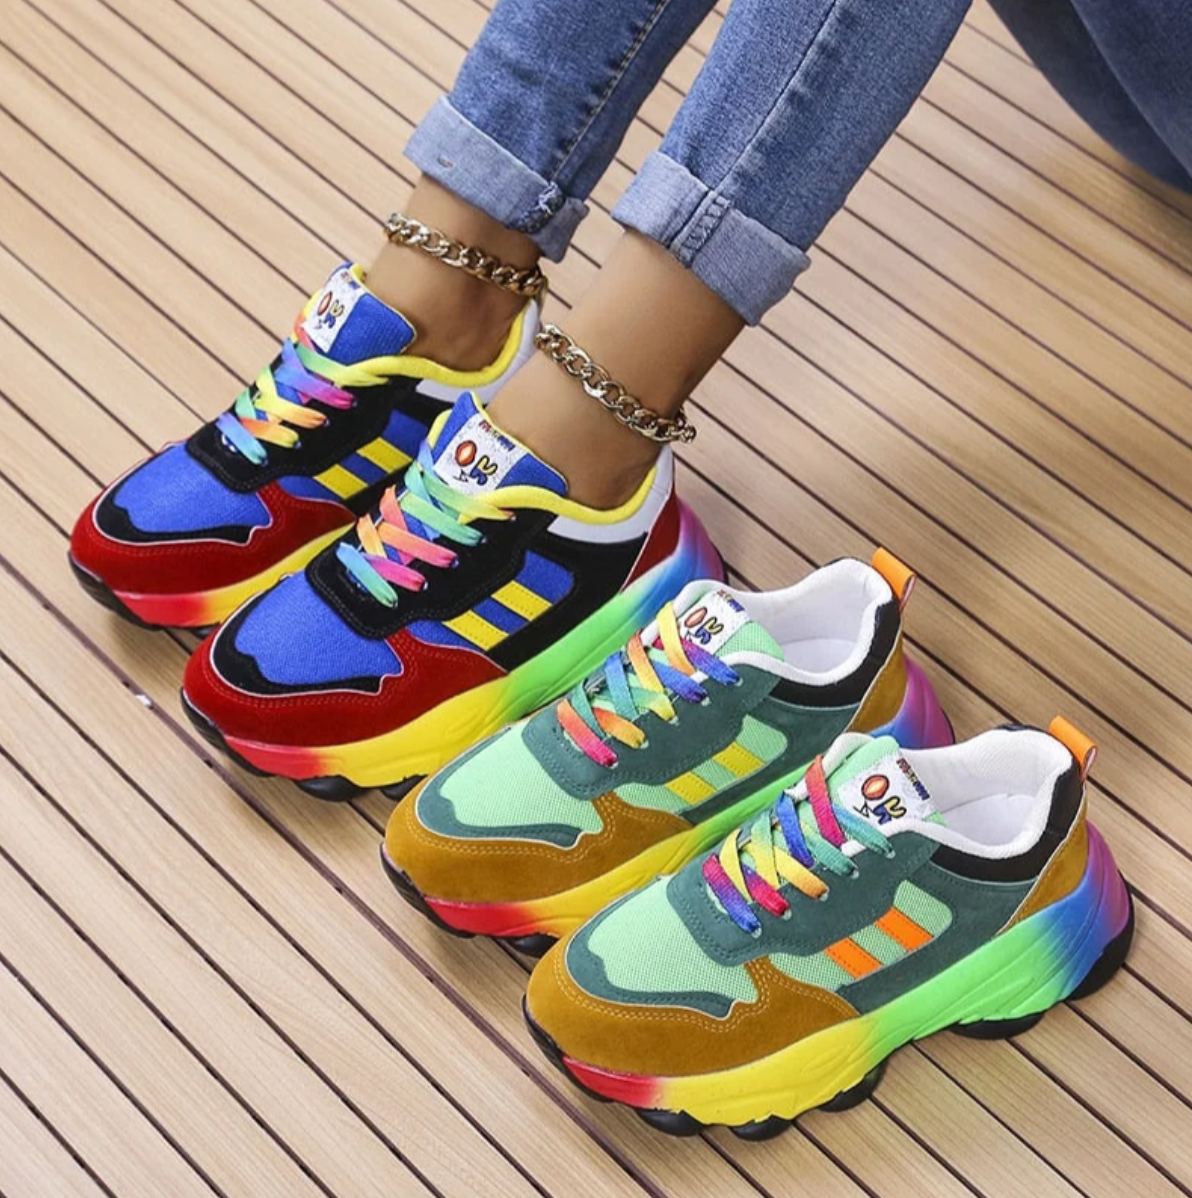 MILLA - Farbenfrohe, stylische orthopädische Sneakers